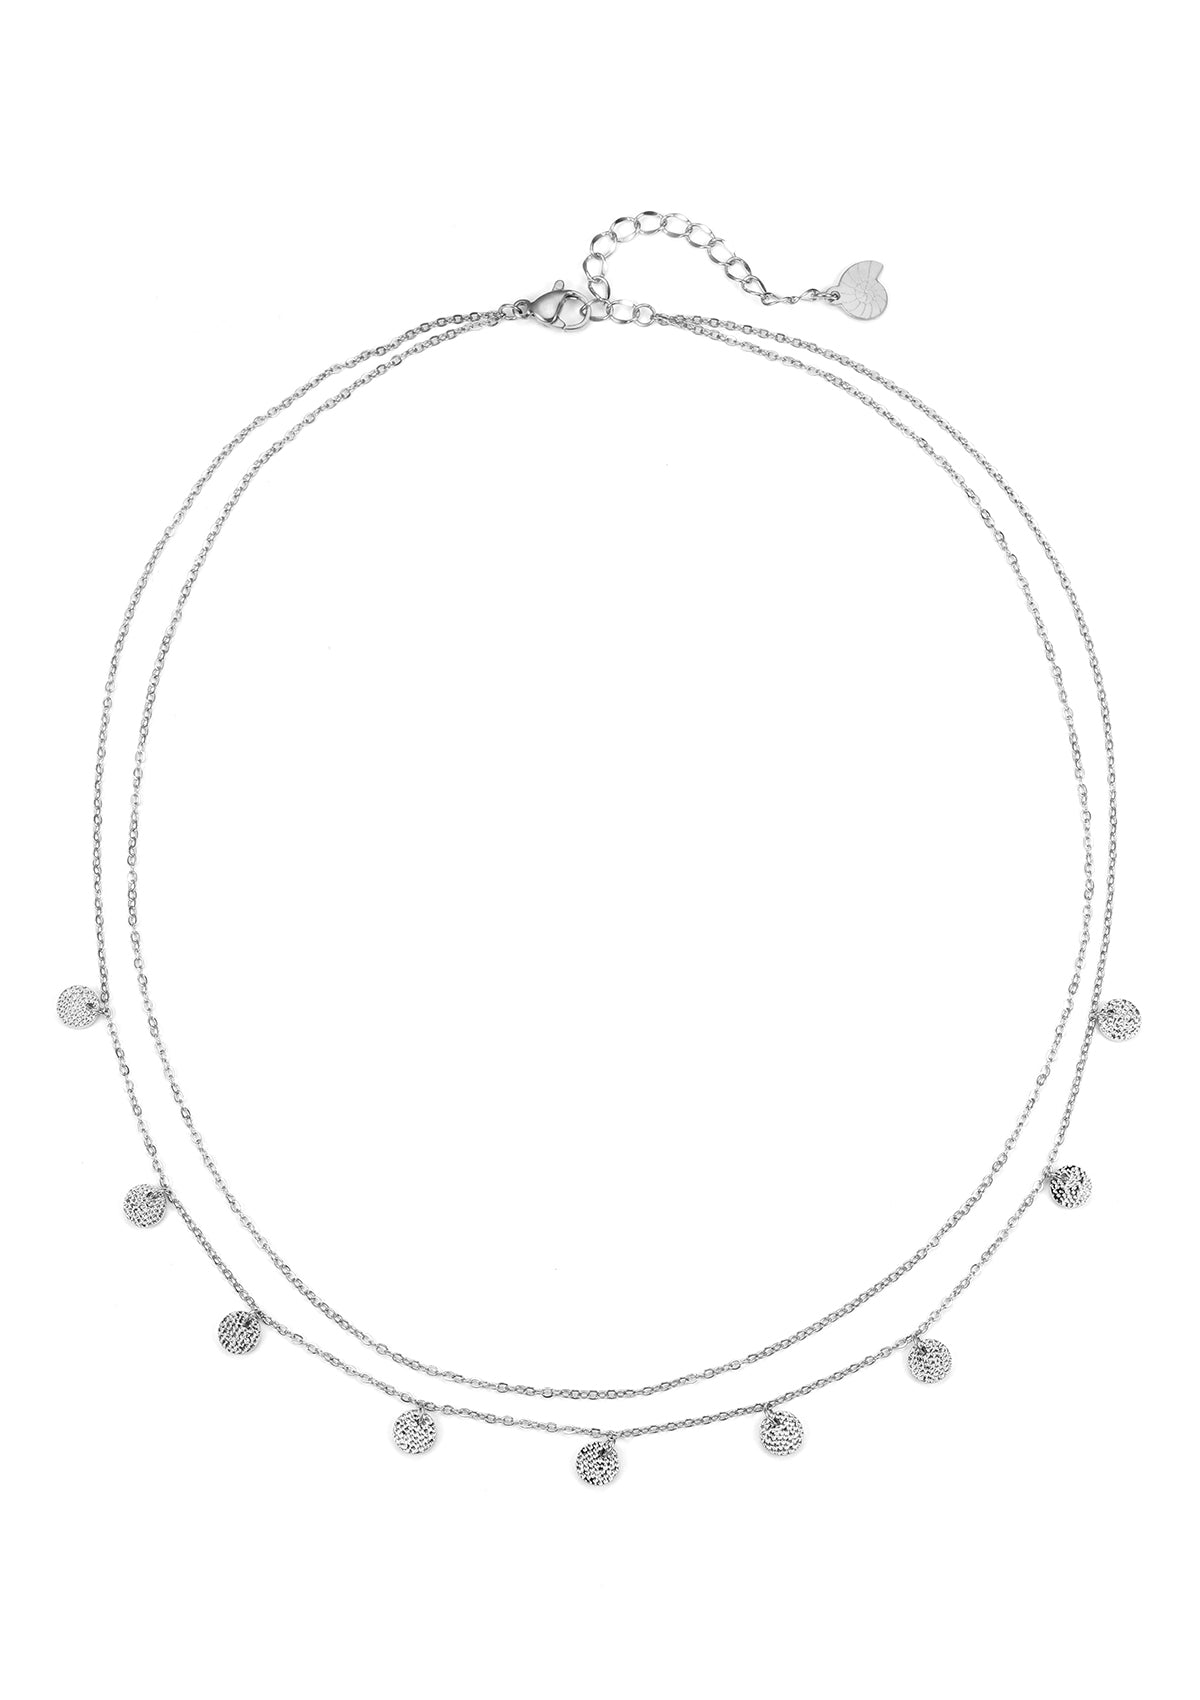 Kette Strukturierter Kreis in Silberfarbe